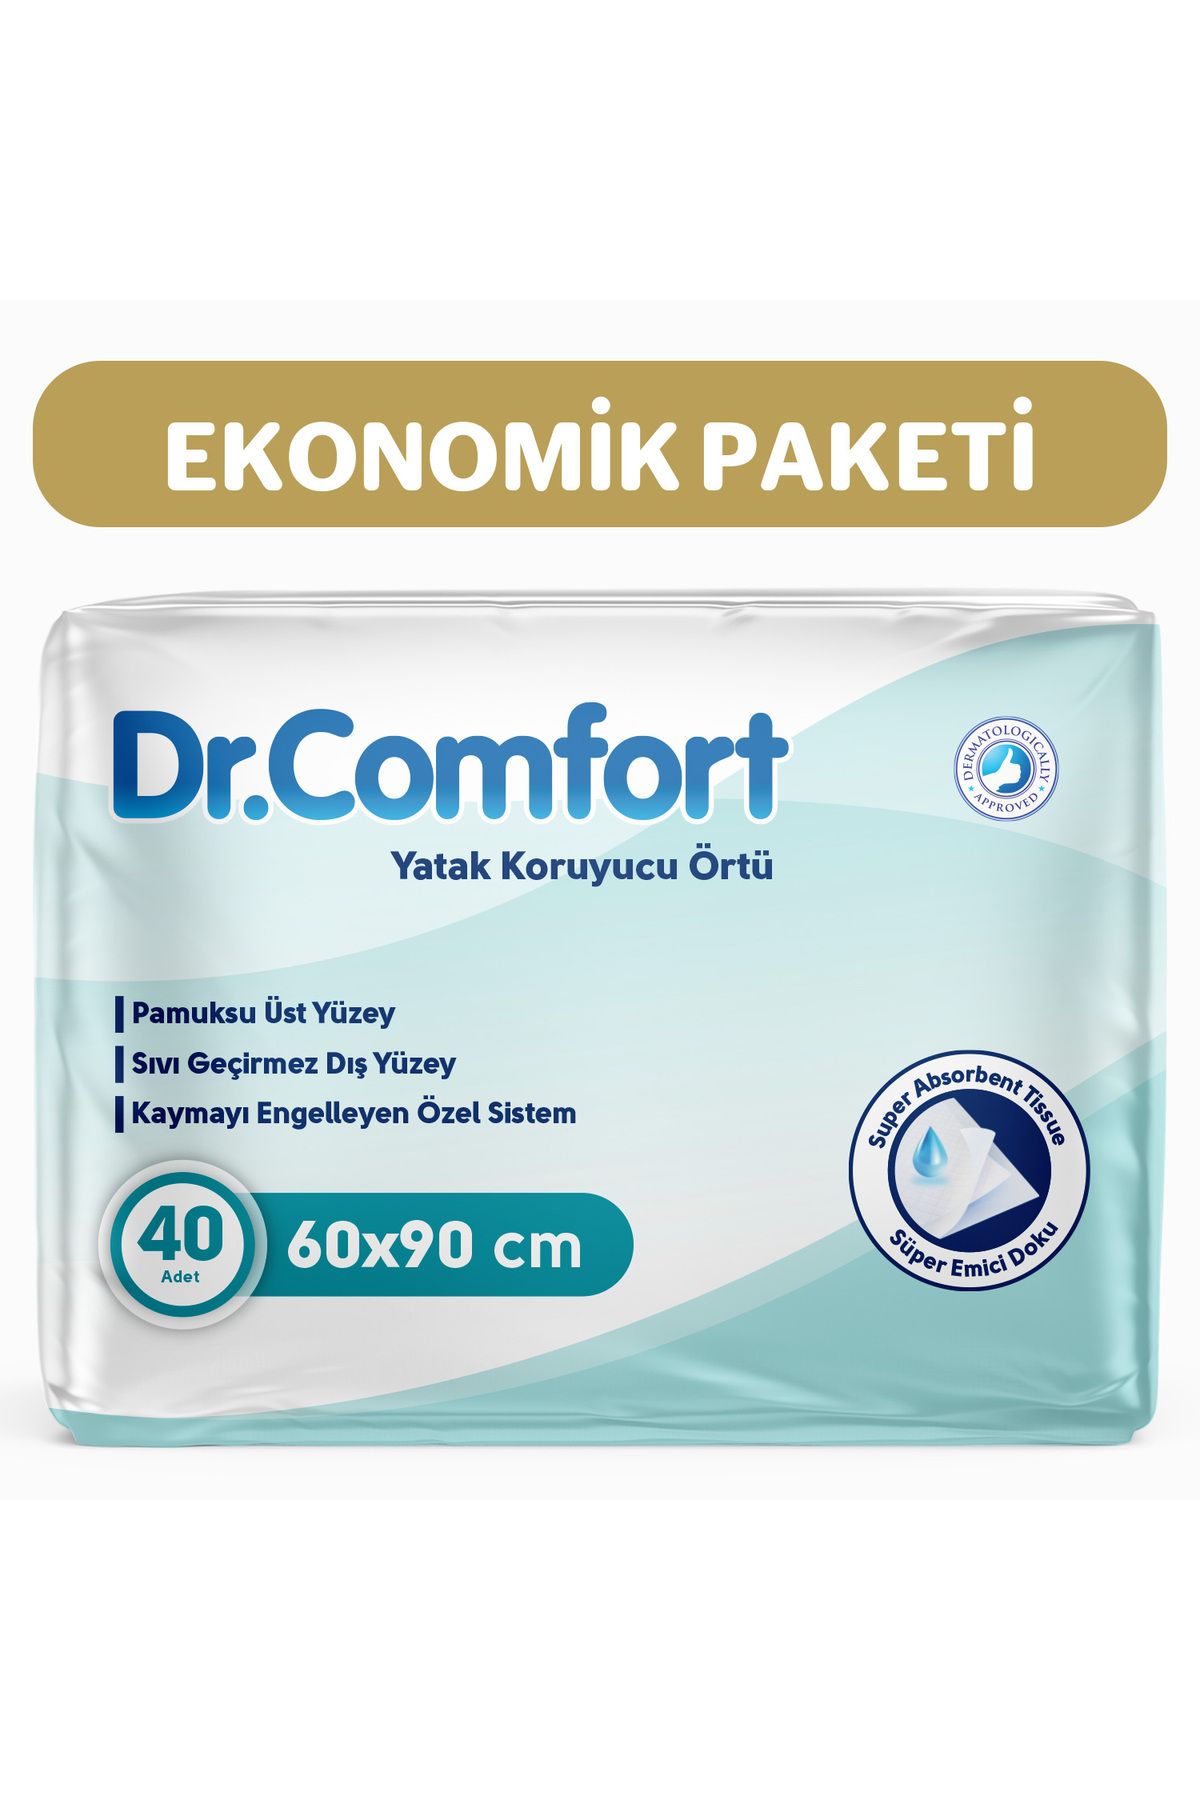 Dr.Comfort Dr Comfort 60x90 Yatak Koruyucu Örtü 40 Adet